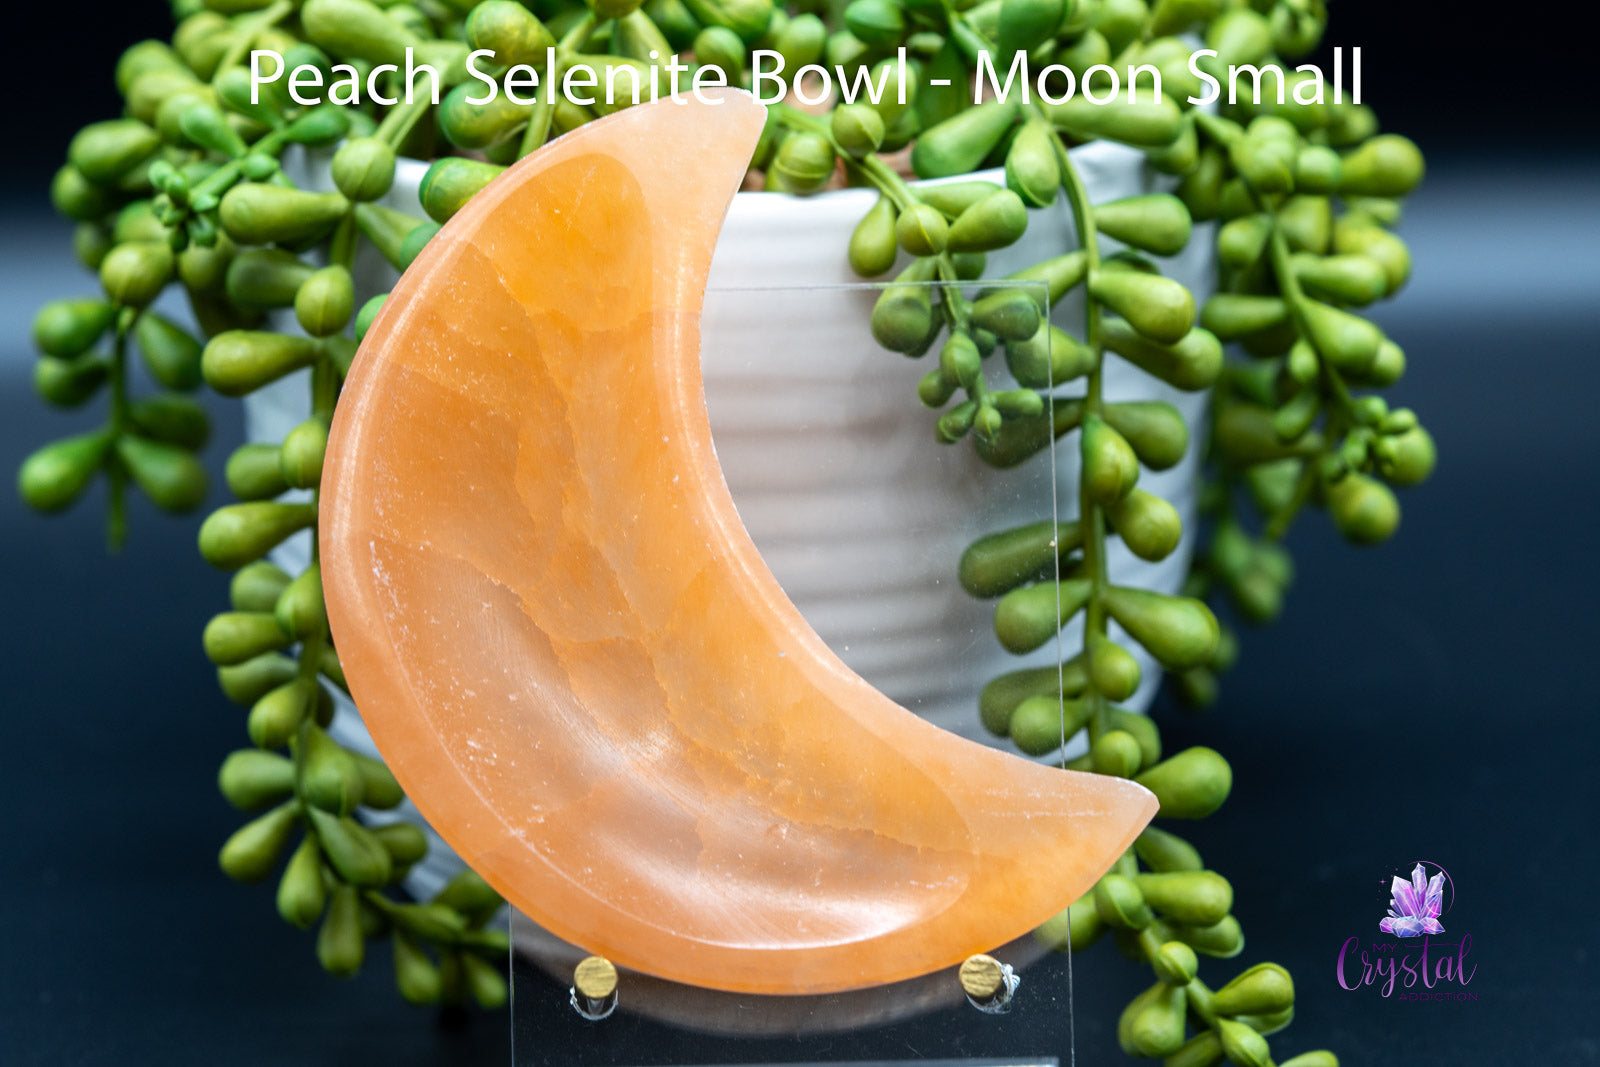 Peach Selenite Bowl - Moon 4"